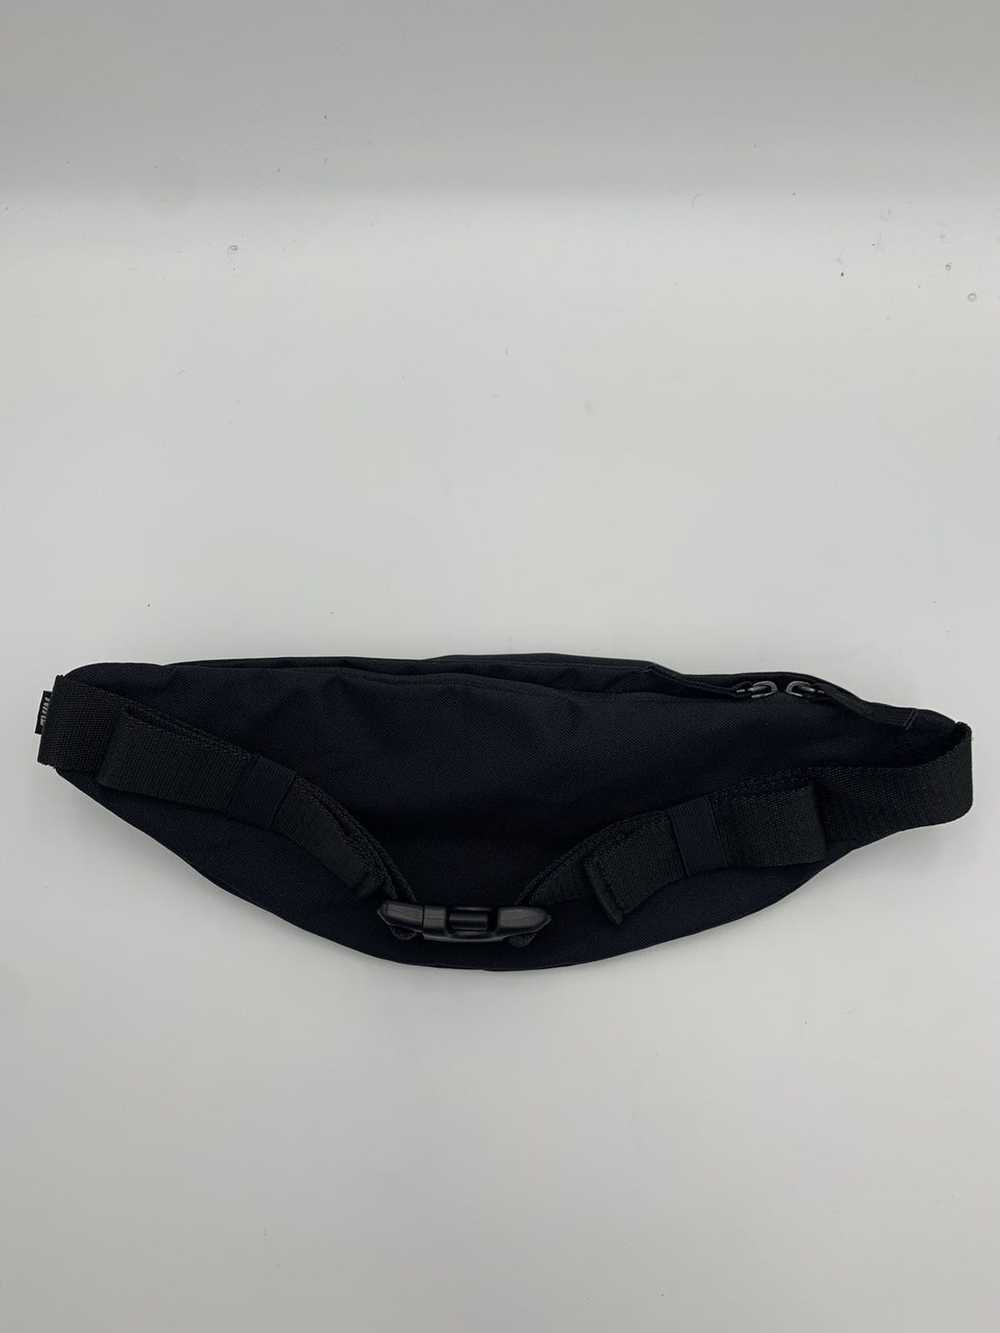 Nike, Bags, Nike Lebron James Fanny Pack Crossbody Bag Hip Waist Belt  Db24780 King Lbj